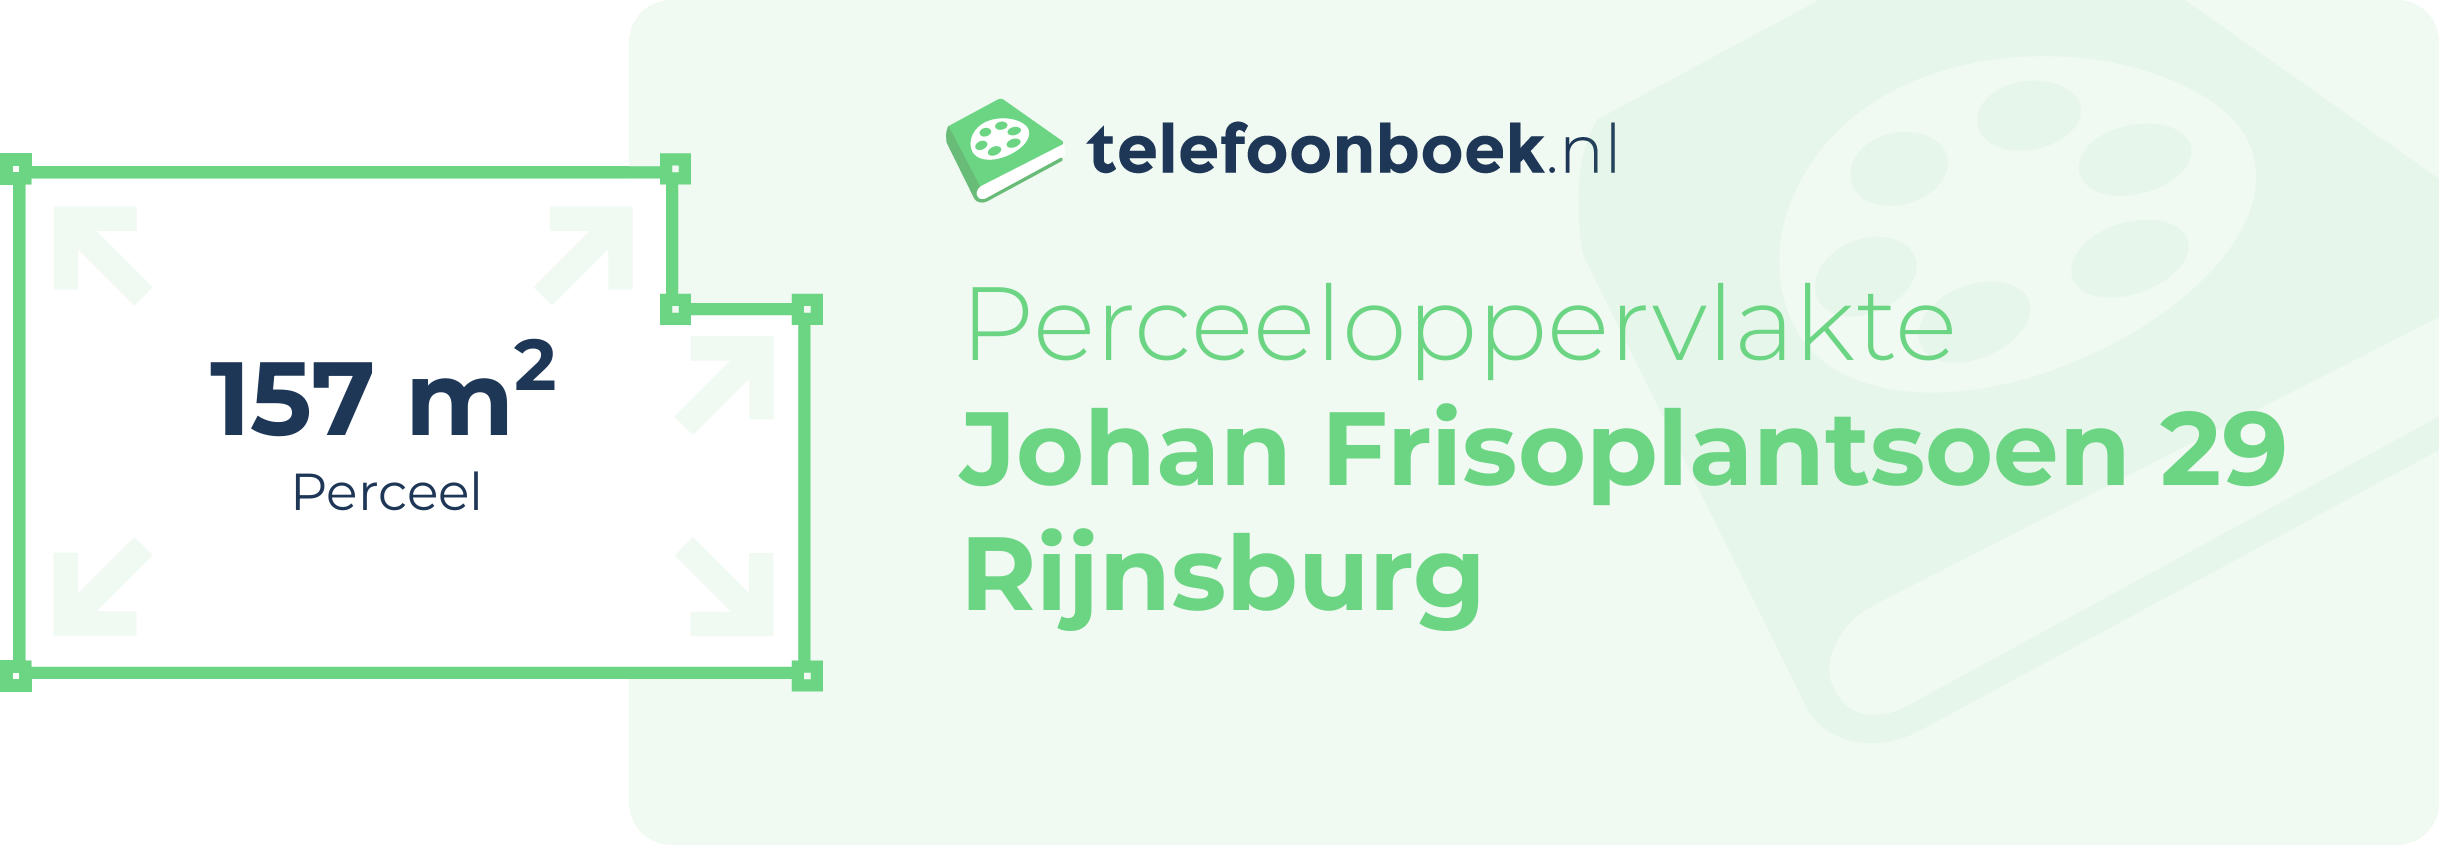 Perceeloppervlakte Johan Frisoplantsoen 29 Rijnsburg